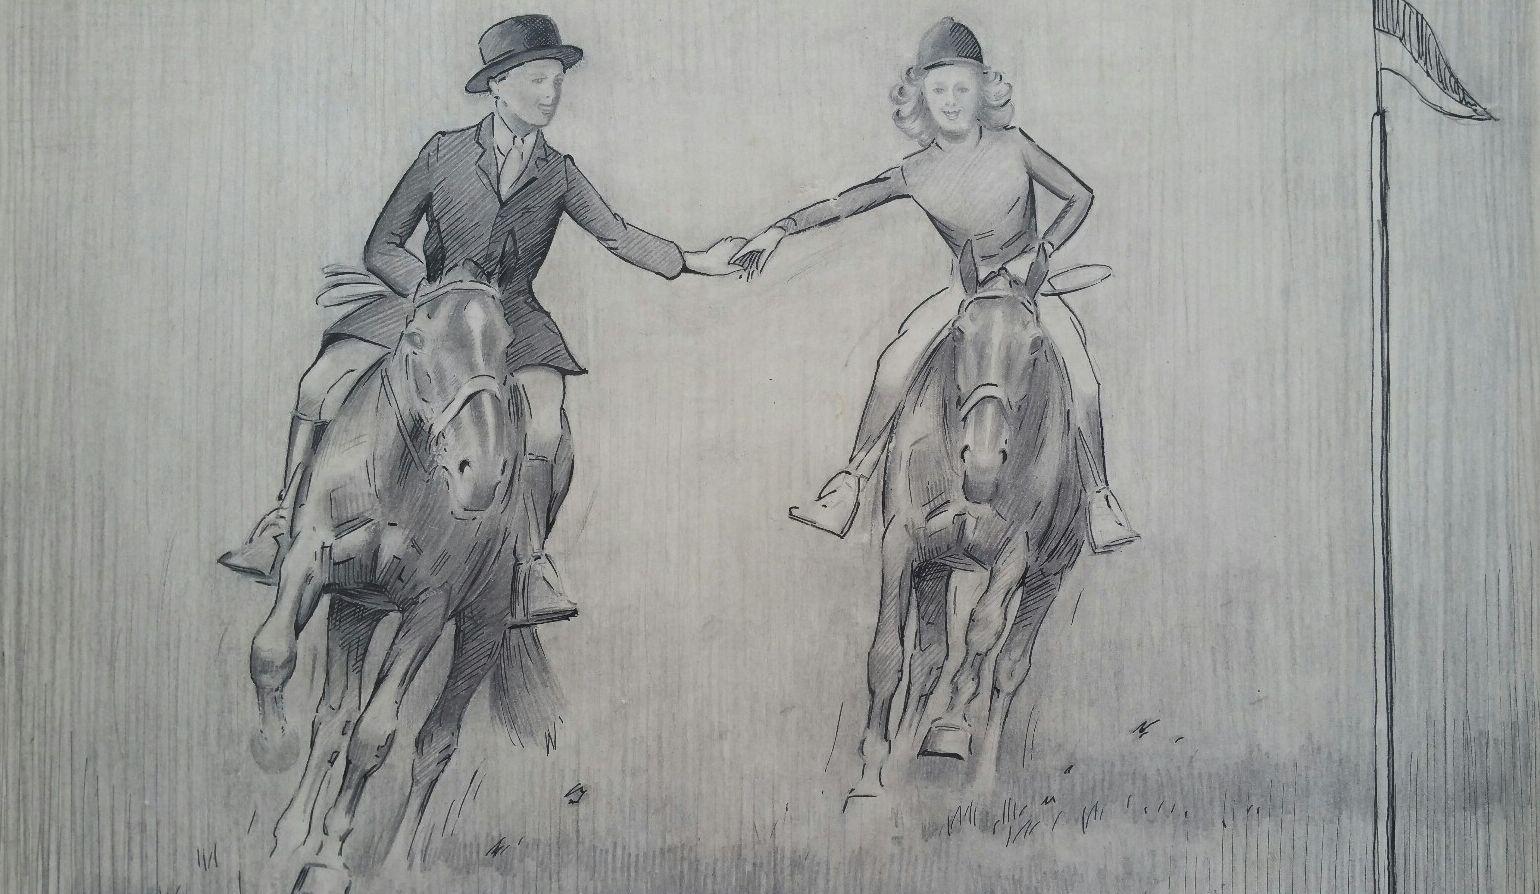 Eric Meade-King Animal Art - English Sporting Art 1930s Huntsman & Hunts Lady Galloping on Horses